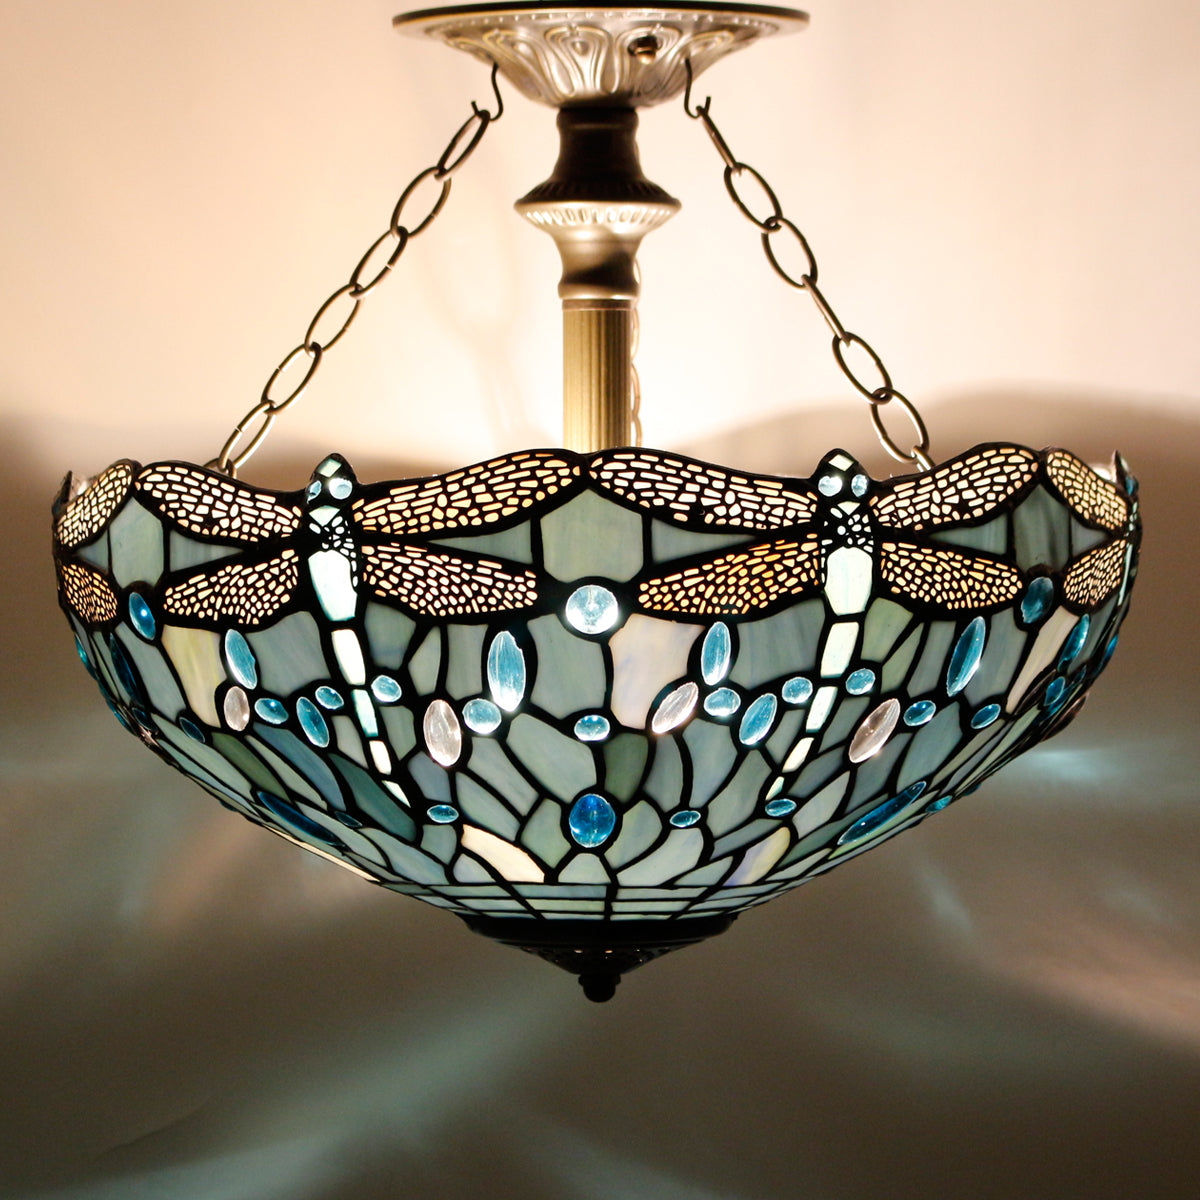 Werfactory® Tiffany Ceiling Lamp 16 Inch